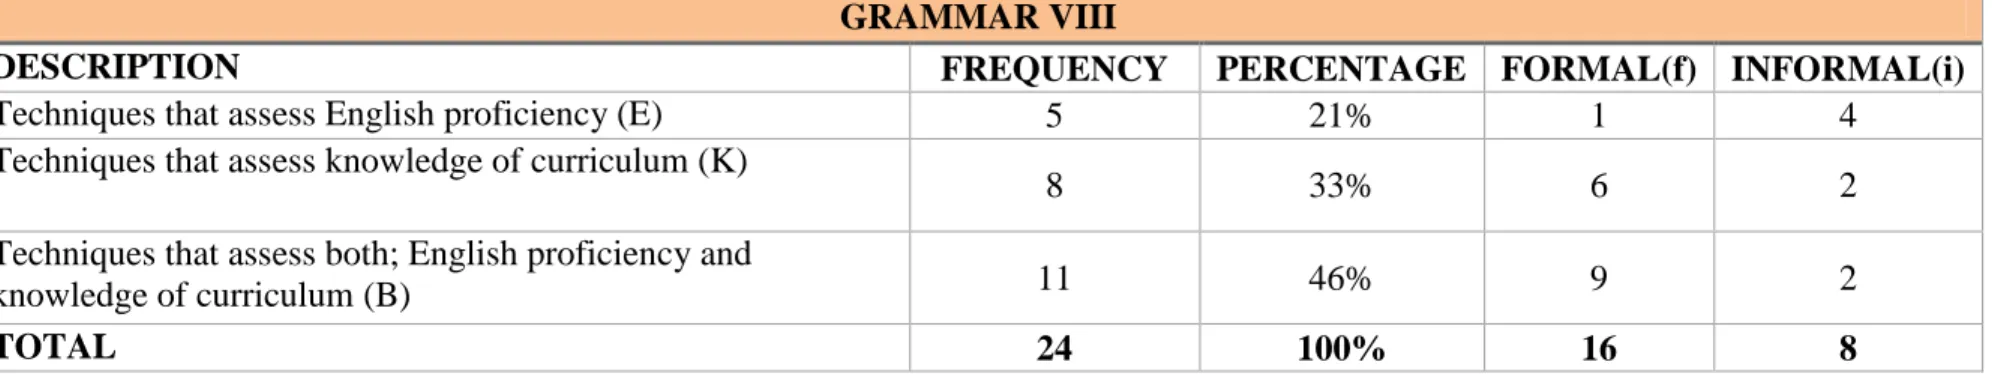 Graphic No. 2: Percentage results, Grammar VIII. 